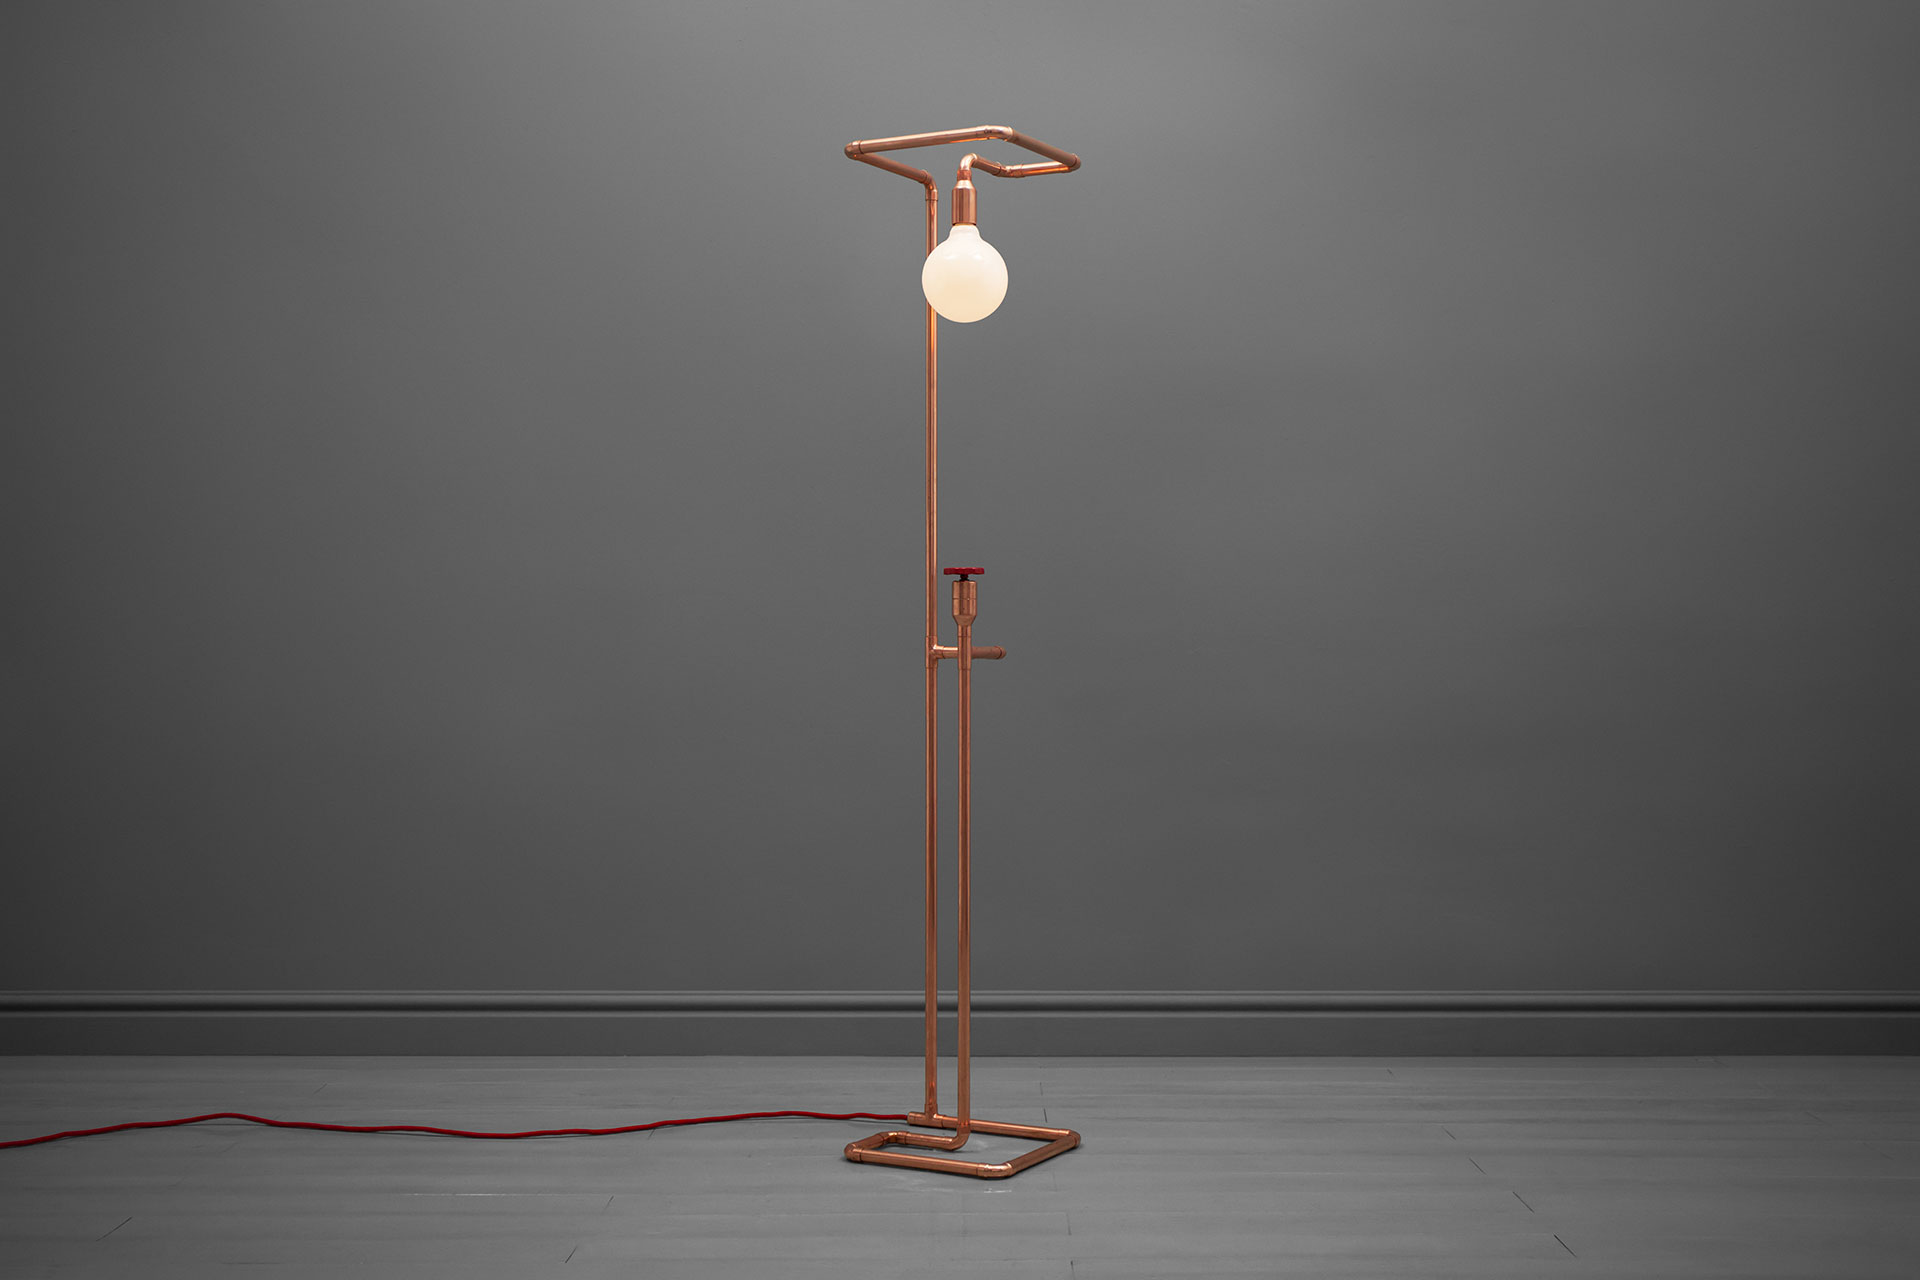 Industrial design copper tubing floor lamp inspired by installation art